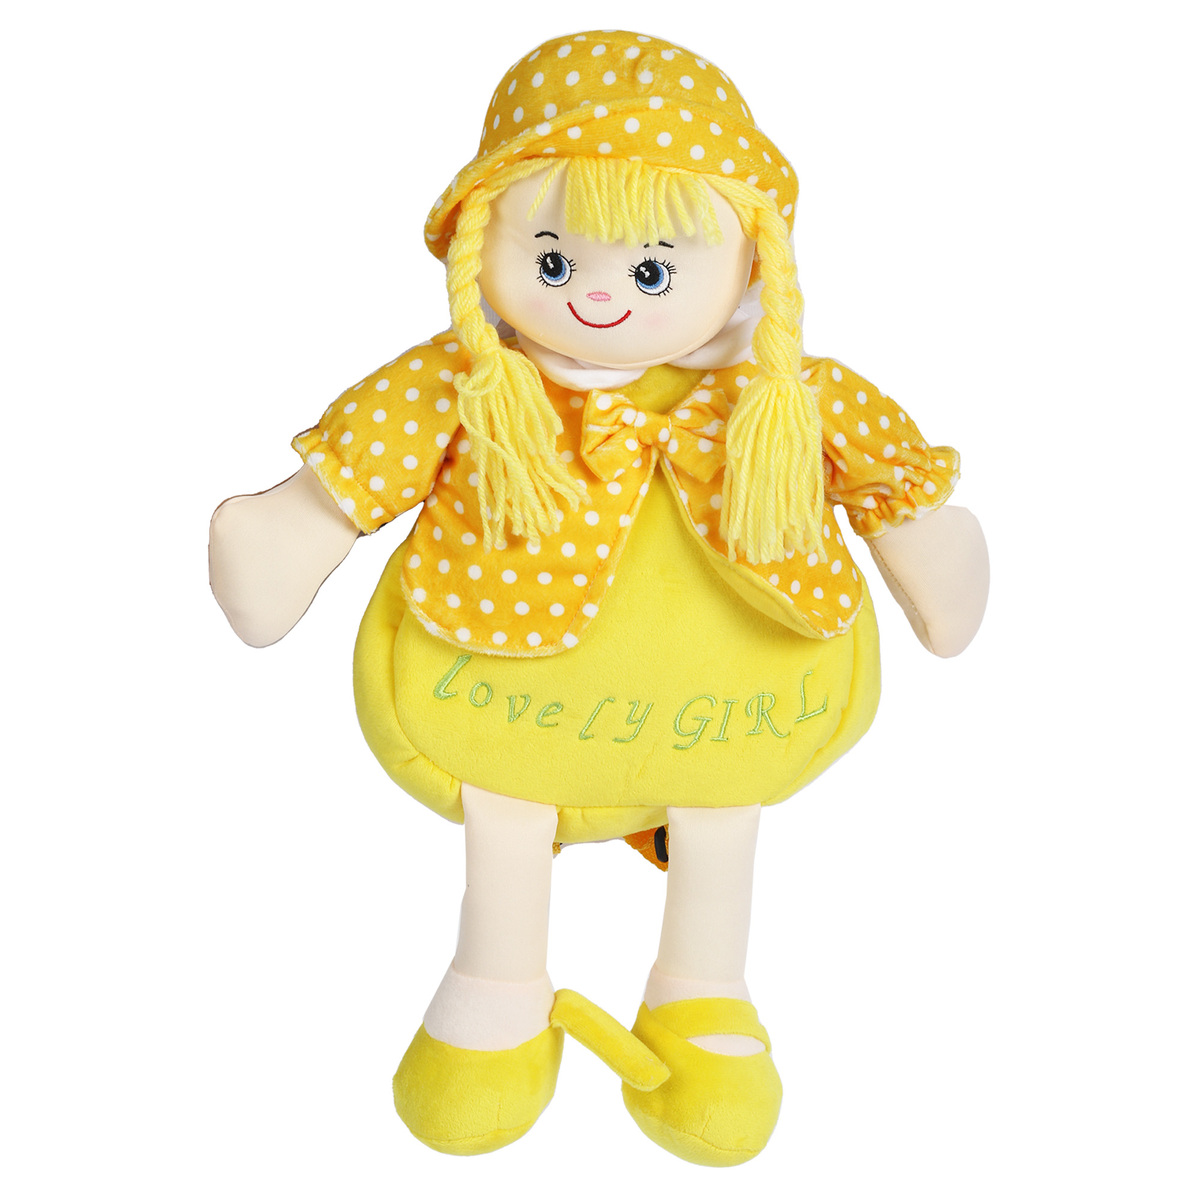 Fabiola Doll With Bag 45cm SY201605345 Assorted